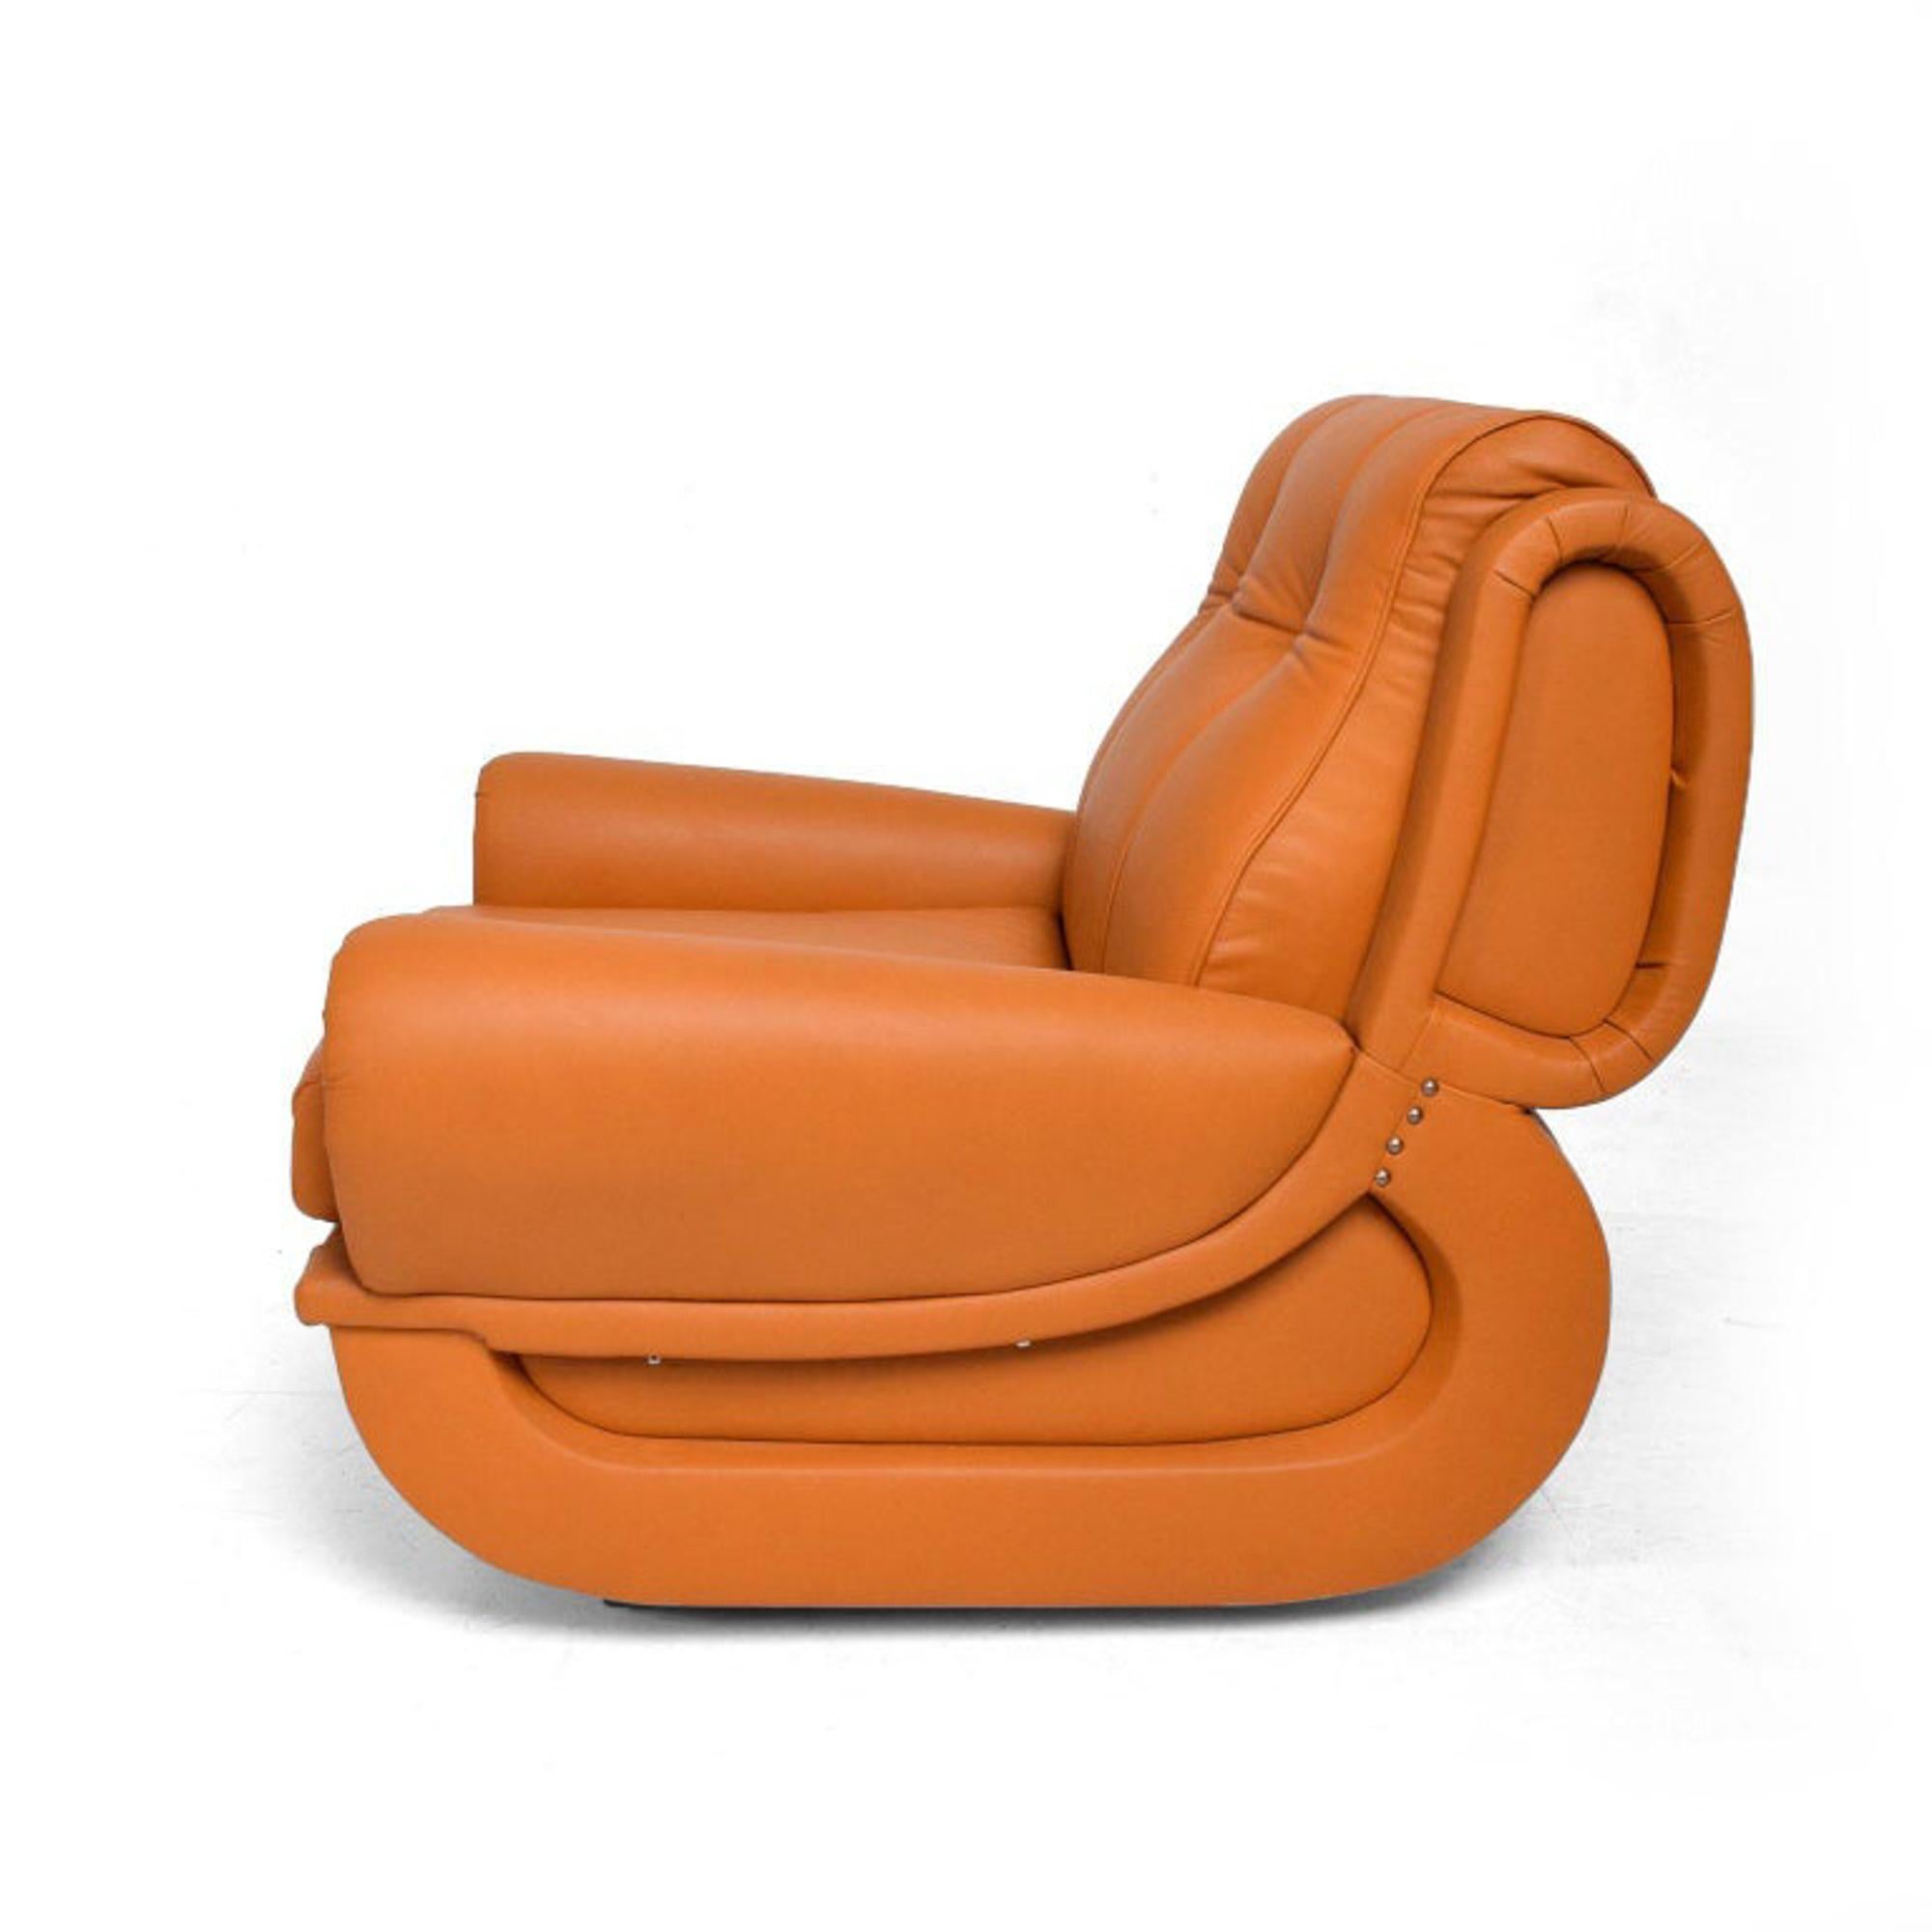 1960s Munari Italian Leather Lounge Chairs Restored For Sale 2